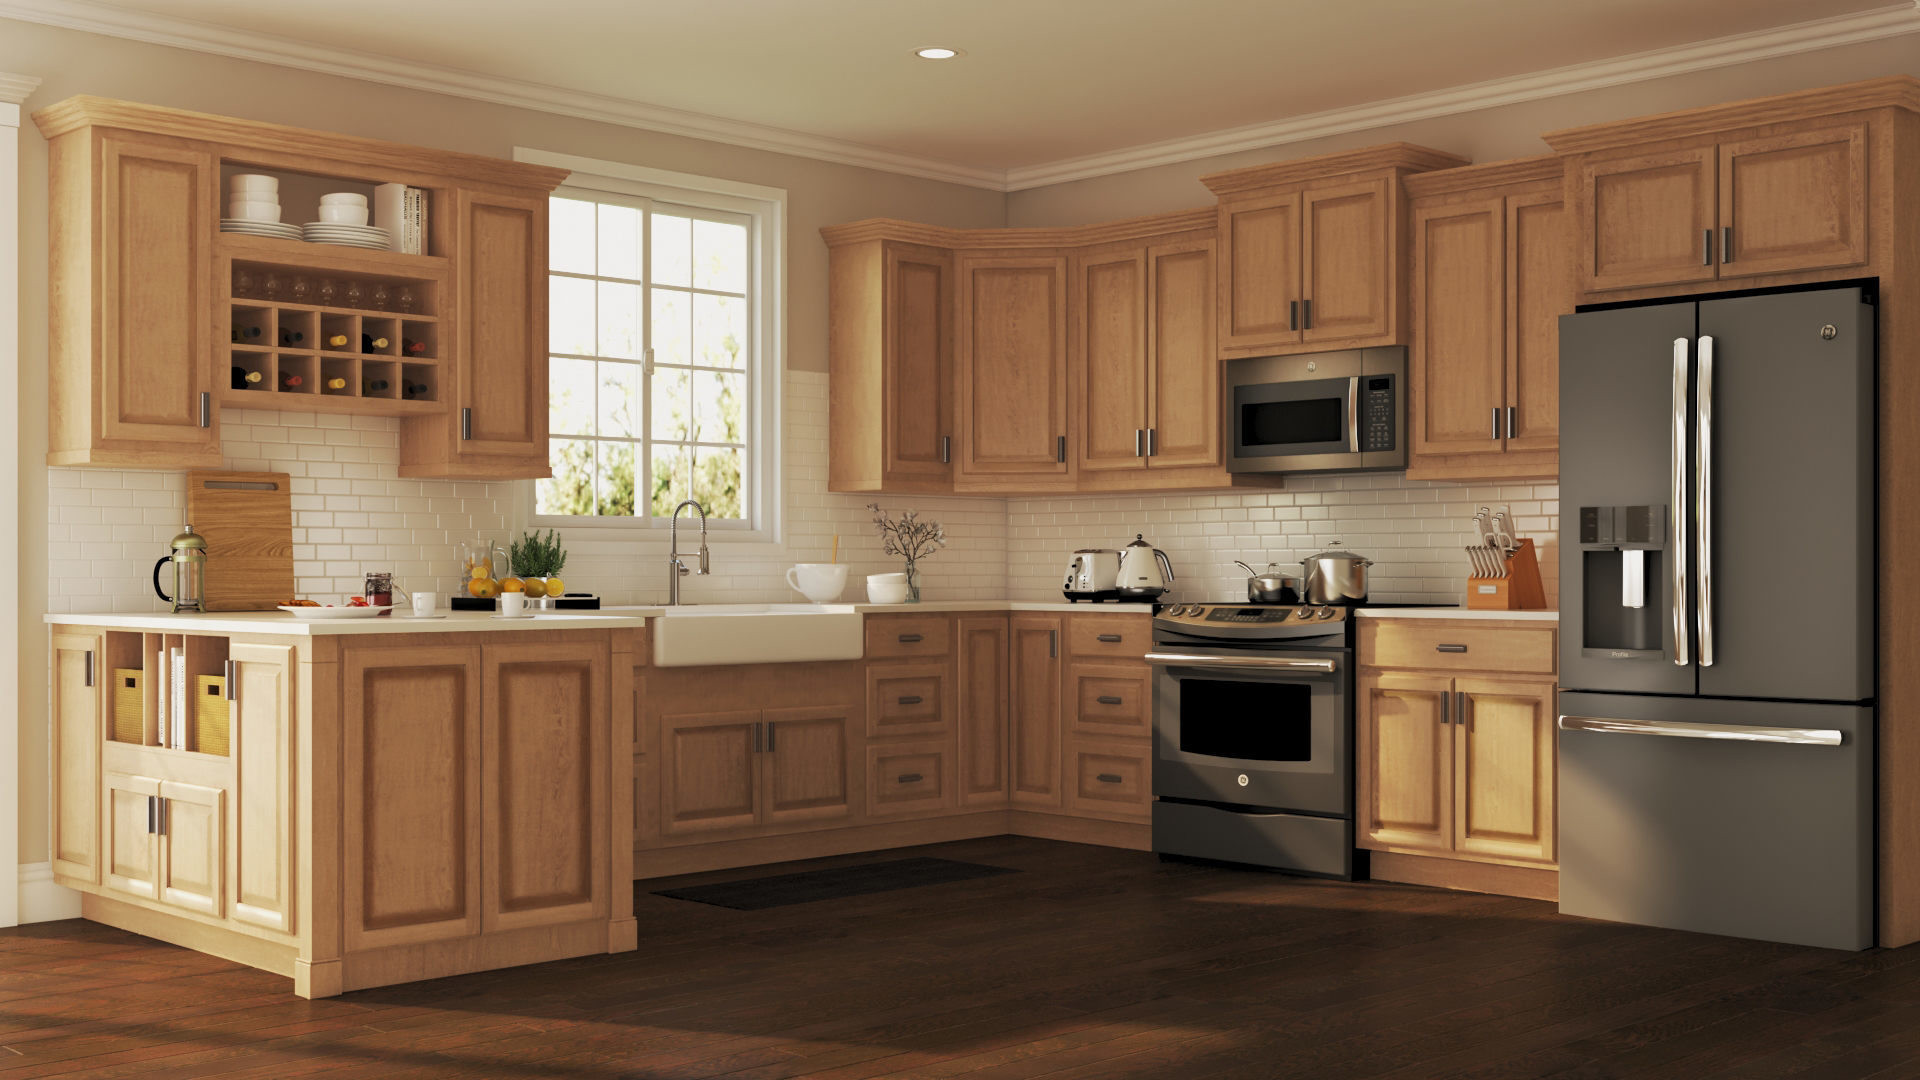 Home Depot Kitchen Cabinet
 Hampton Wall Kitchen Cabinets in Medium Oak – Kitchen